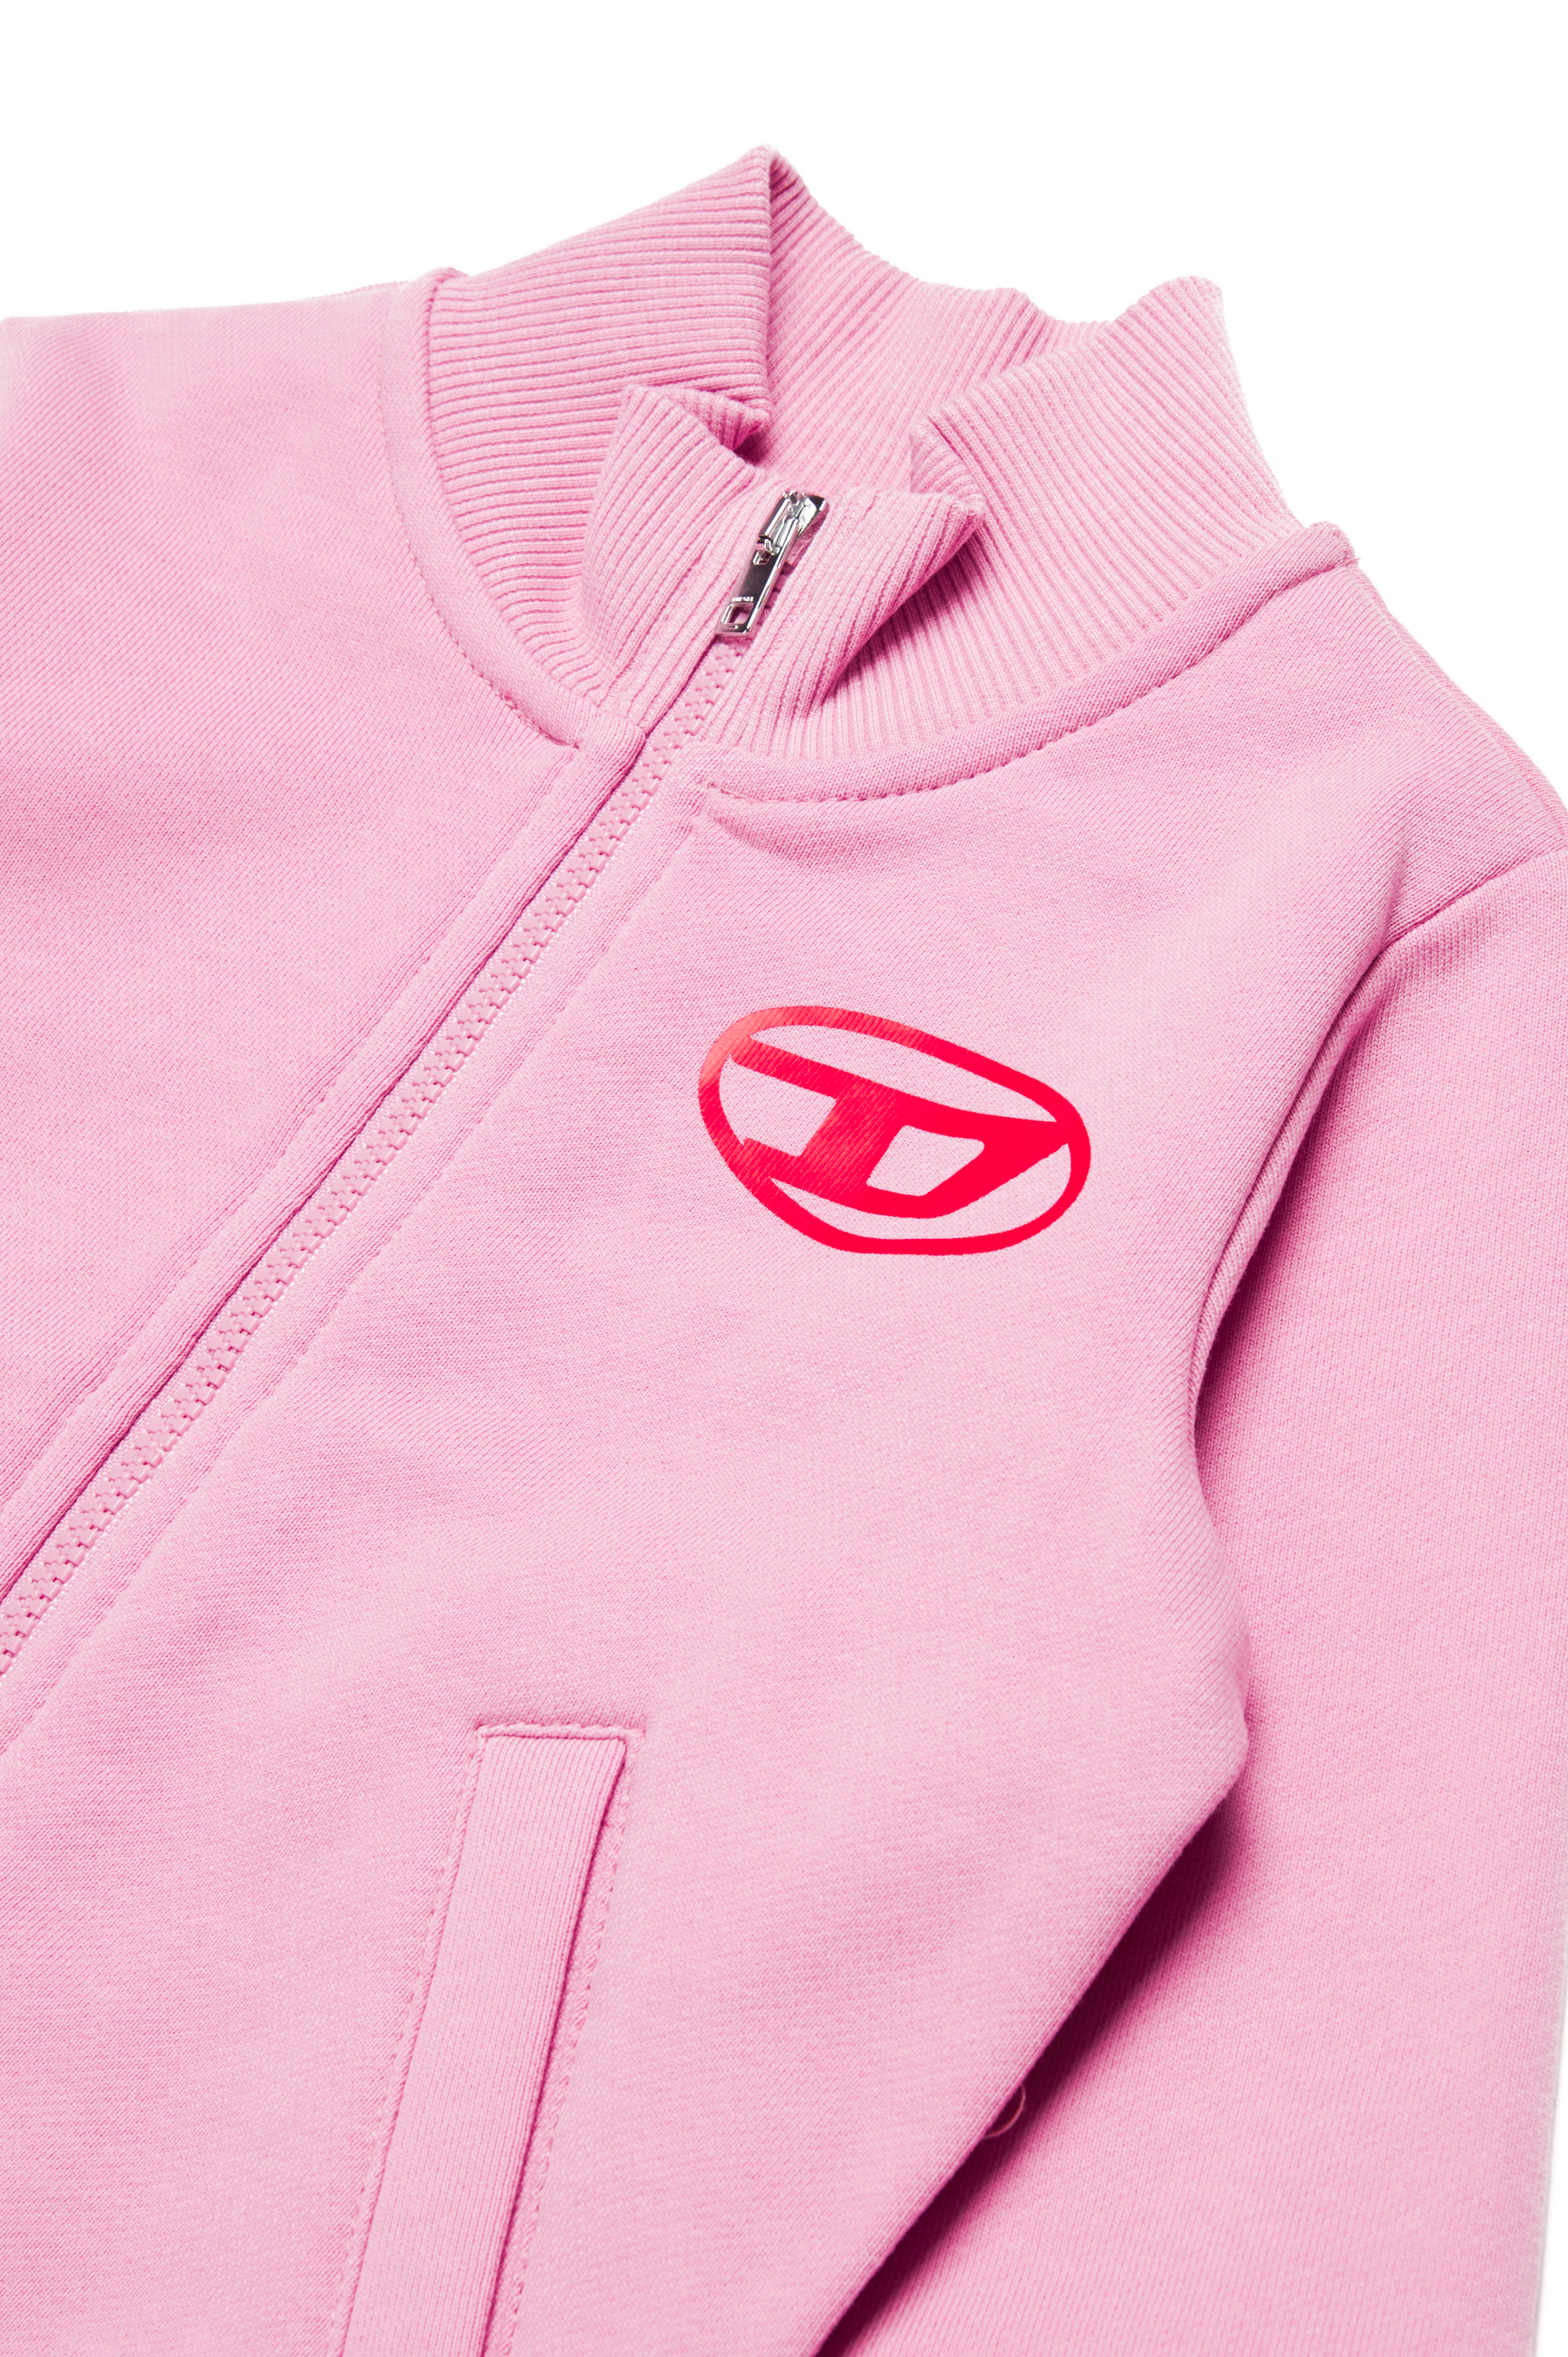 Diesel - SMARCOB, Unisex Zipped sweatshirt with Oval D print in Pink - Image 3